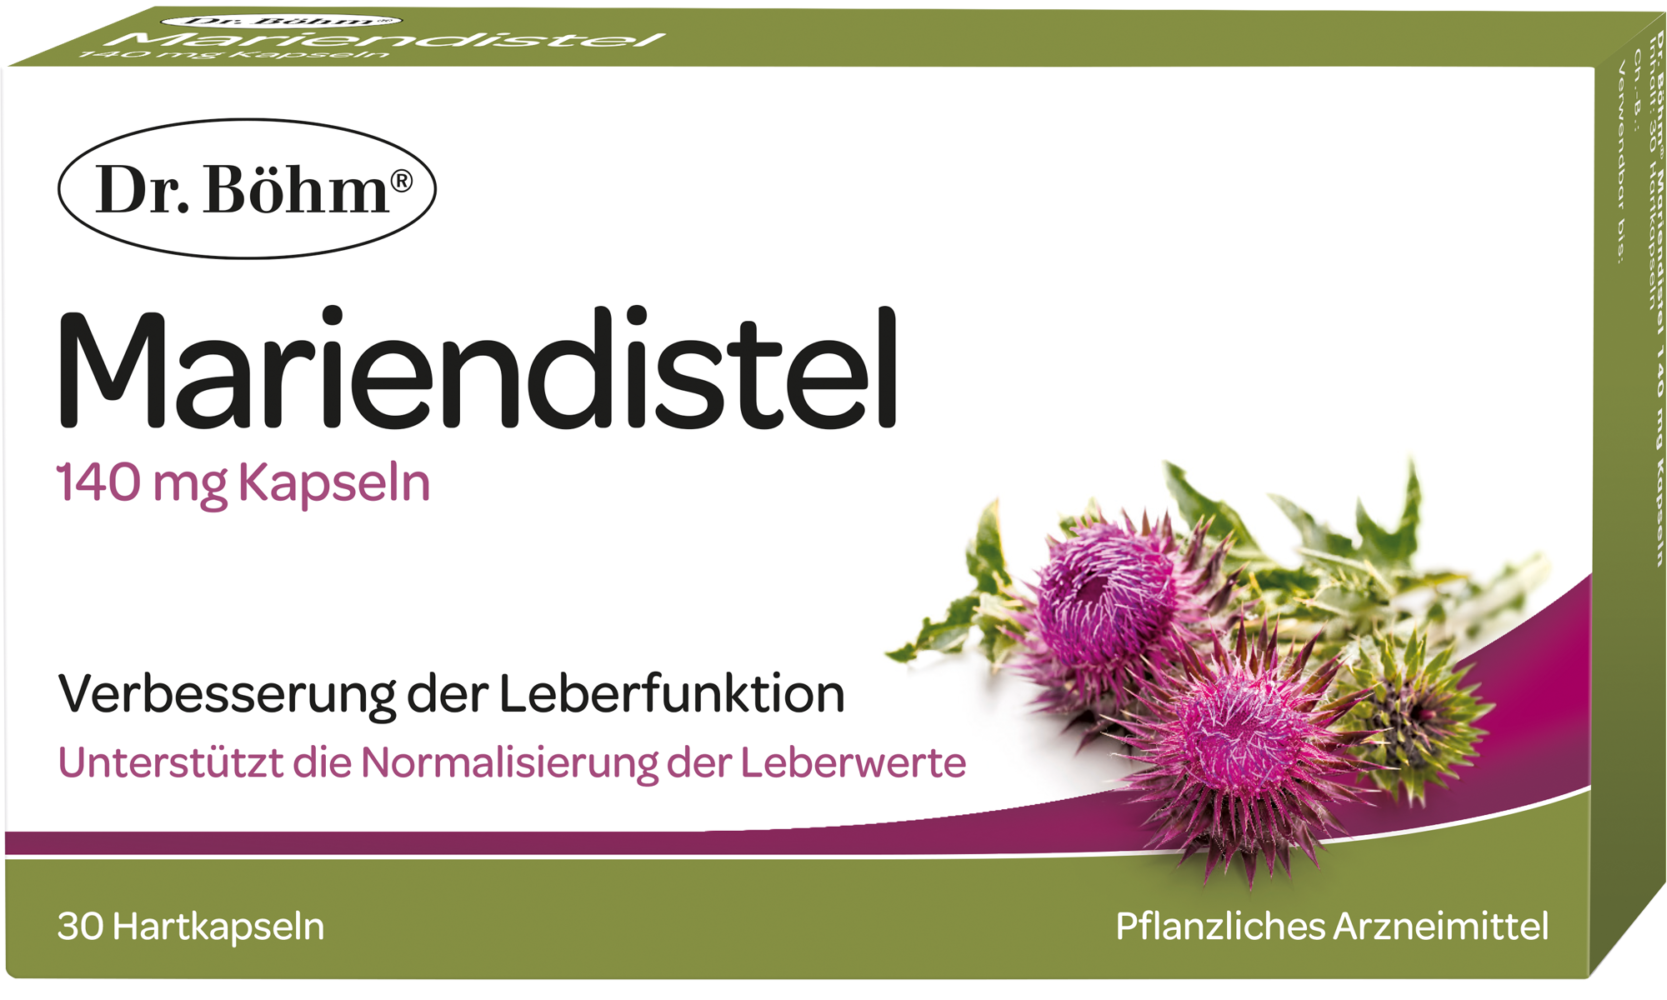 Dr. Böhm® Mariendistel 140 mg Kapseln - Verbesserung der Leberfunktion